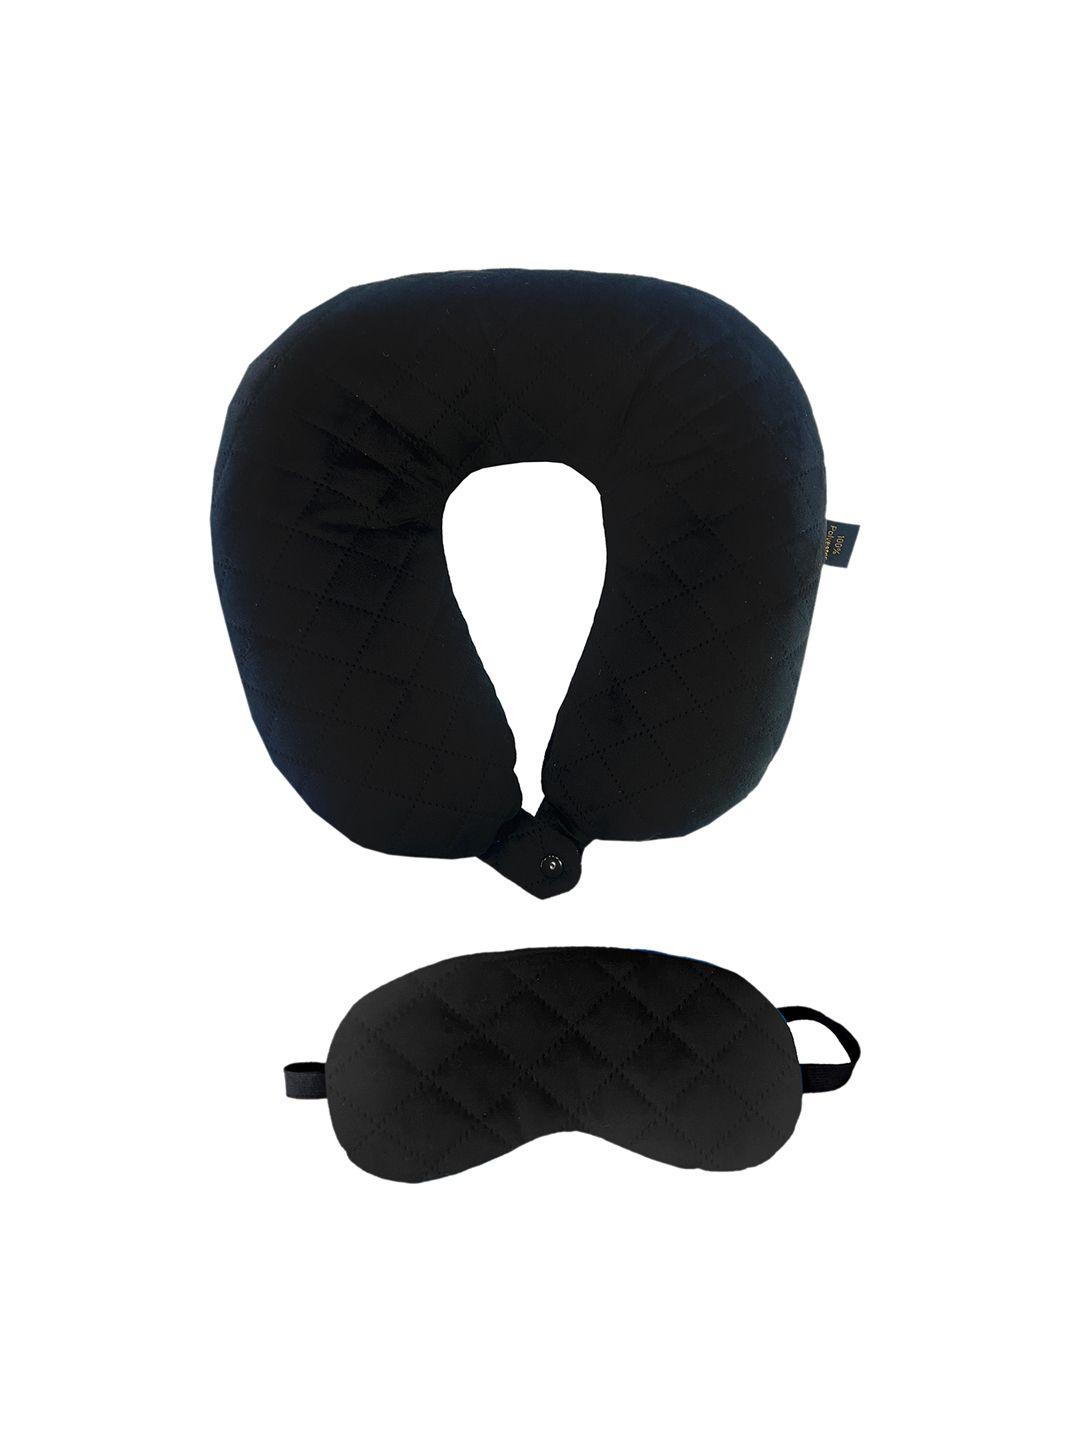 lushomes unisex black neck pillow and eye mask travel accessory